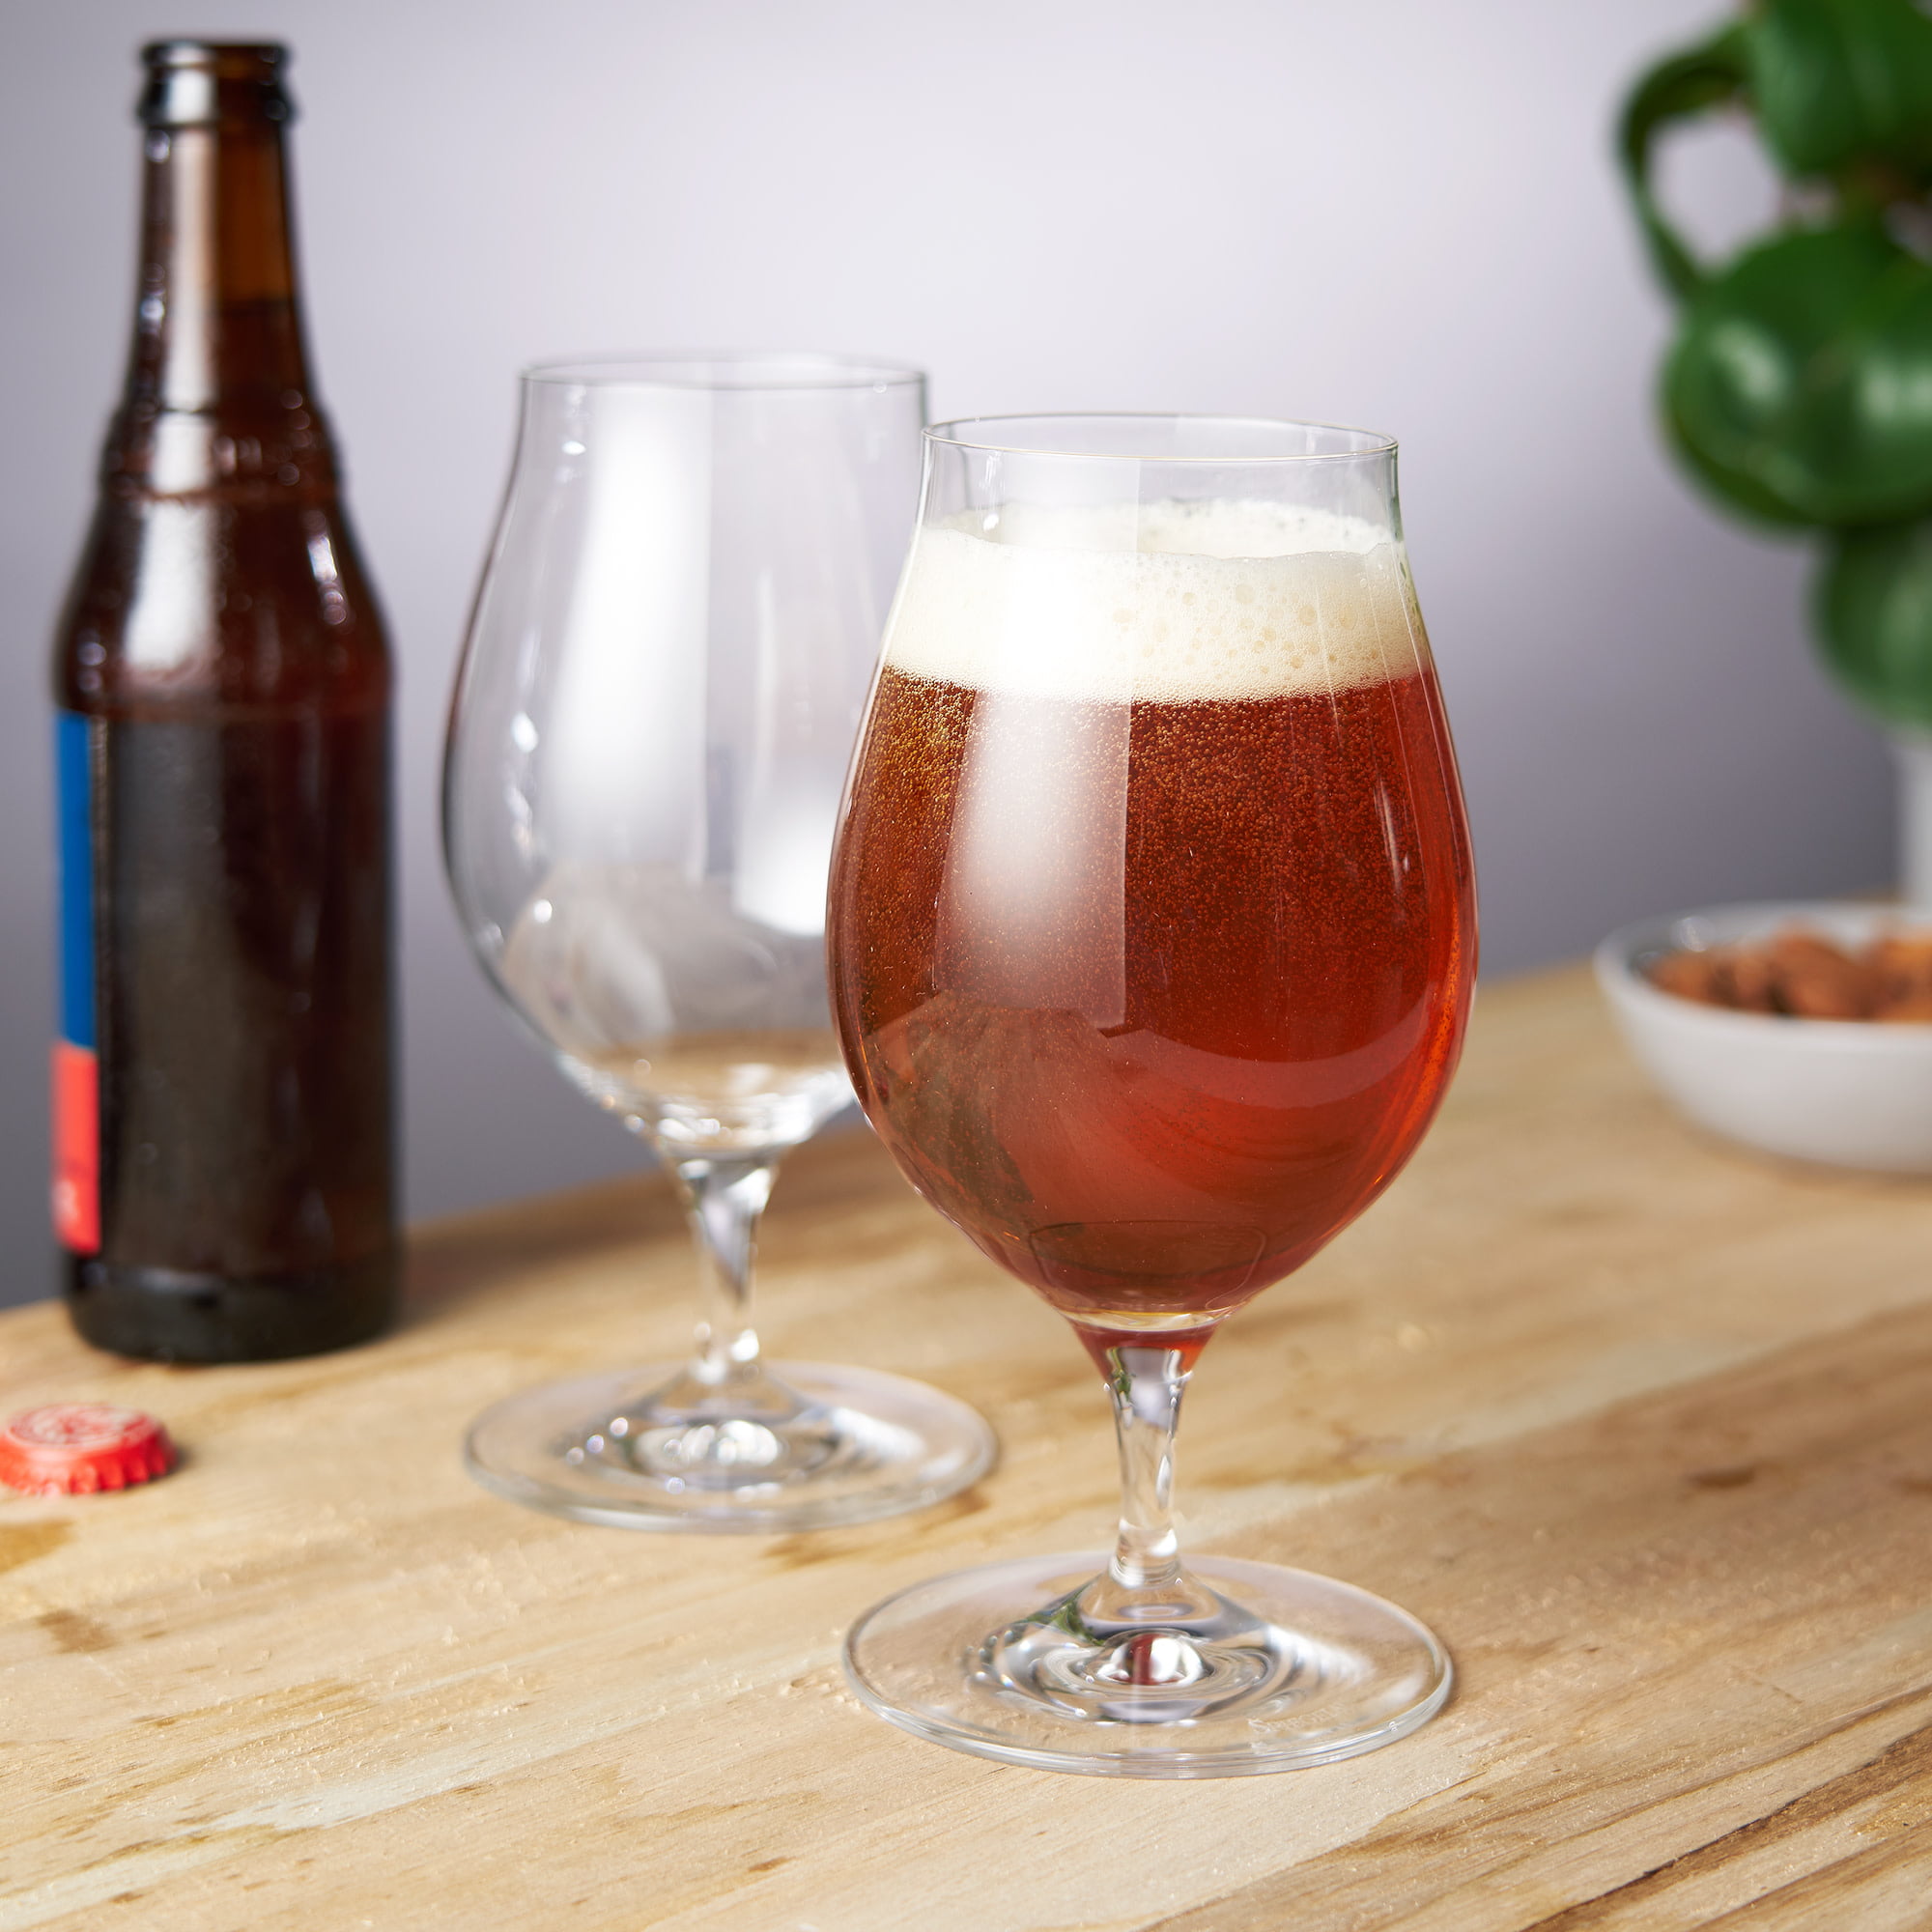 Spiegelau Craft Beer 19.1 oz IPA Glasses (4 ct) Delivery - DoorDash